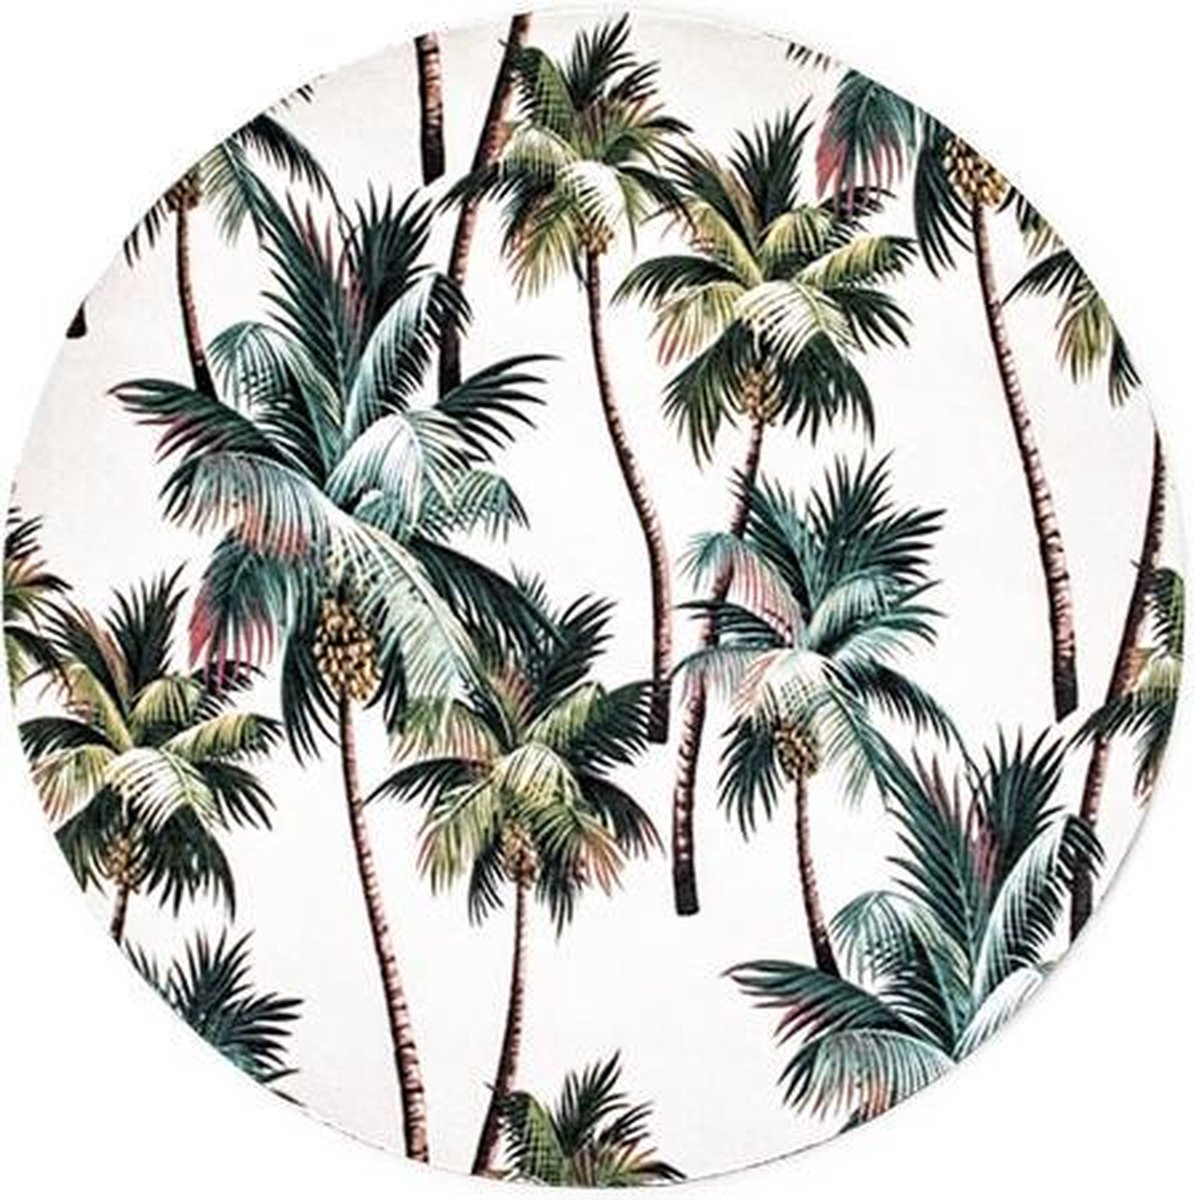 Computer - muismat vintage california palmtrees - rond - rubber - buigbaar - anti-slip - mousepad - Merkloos